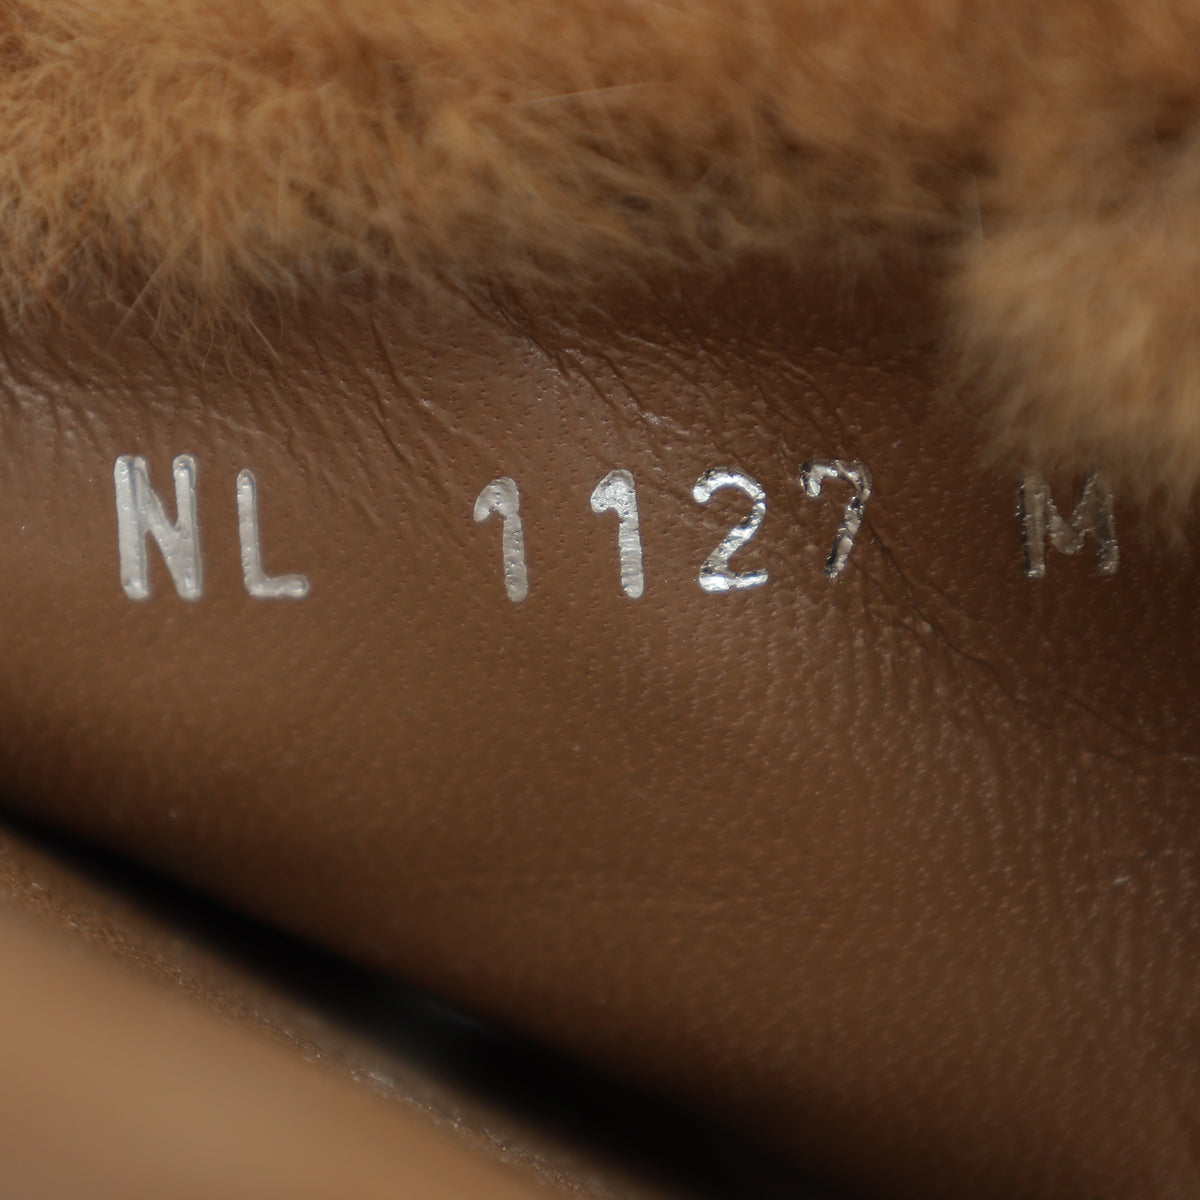 Louis Vuitton Bicolor Mink Fur Lock It Flat Mule 40 – The Closet